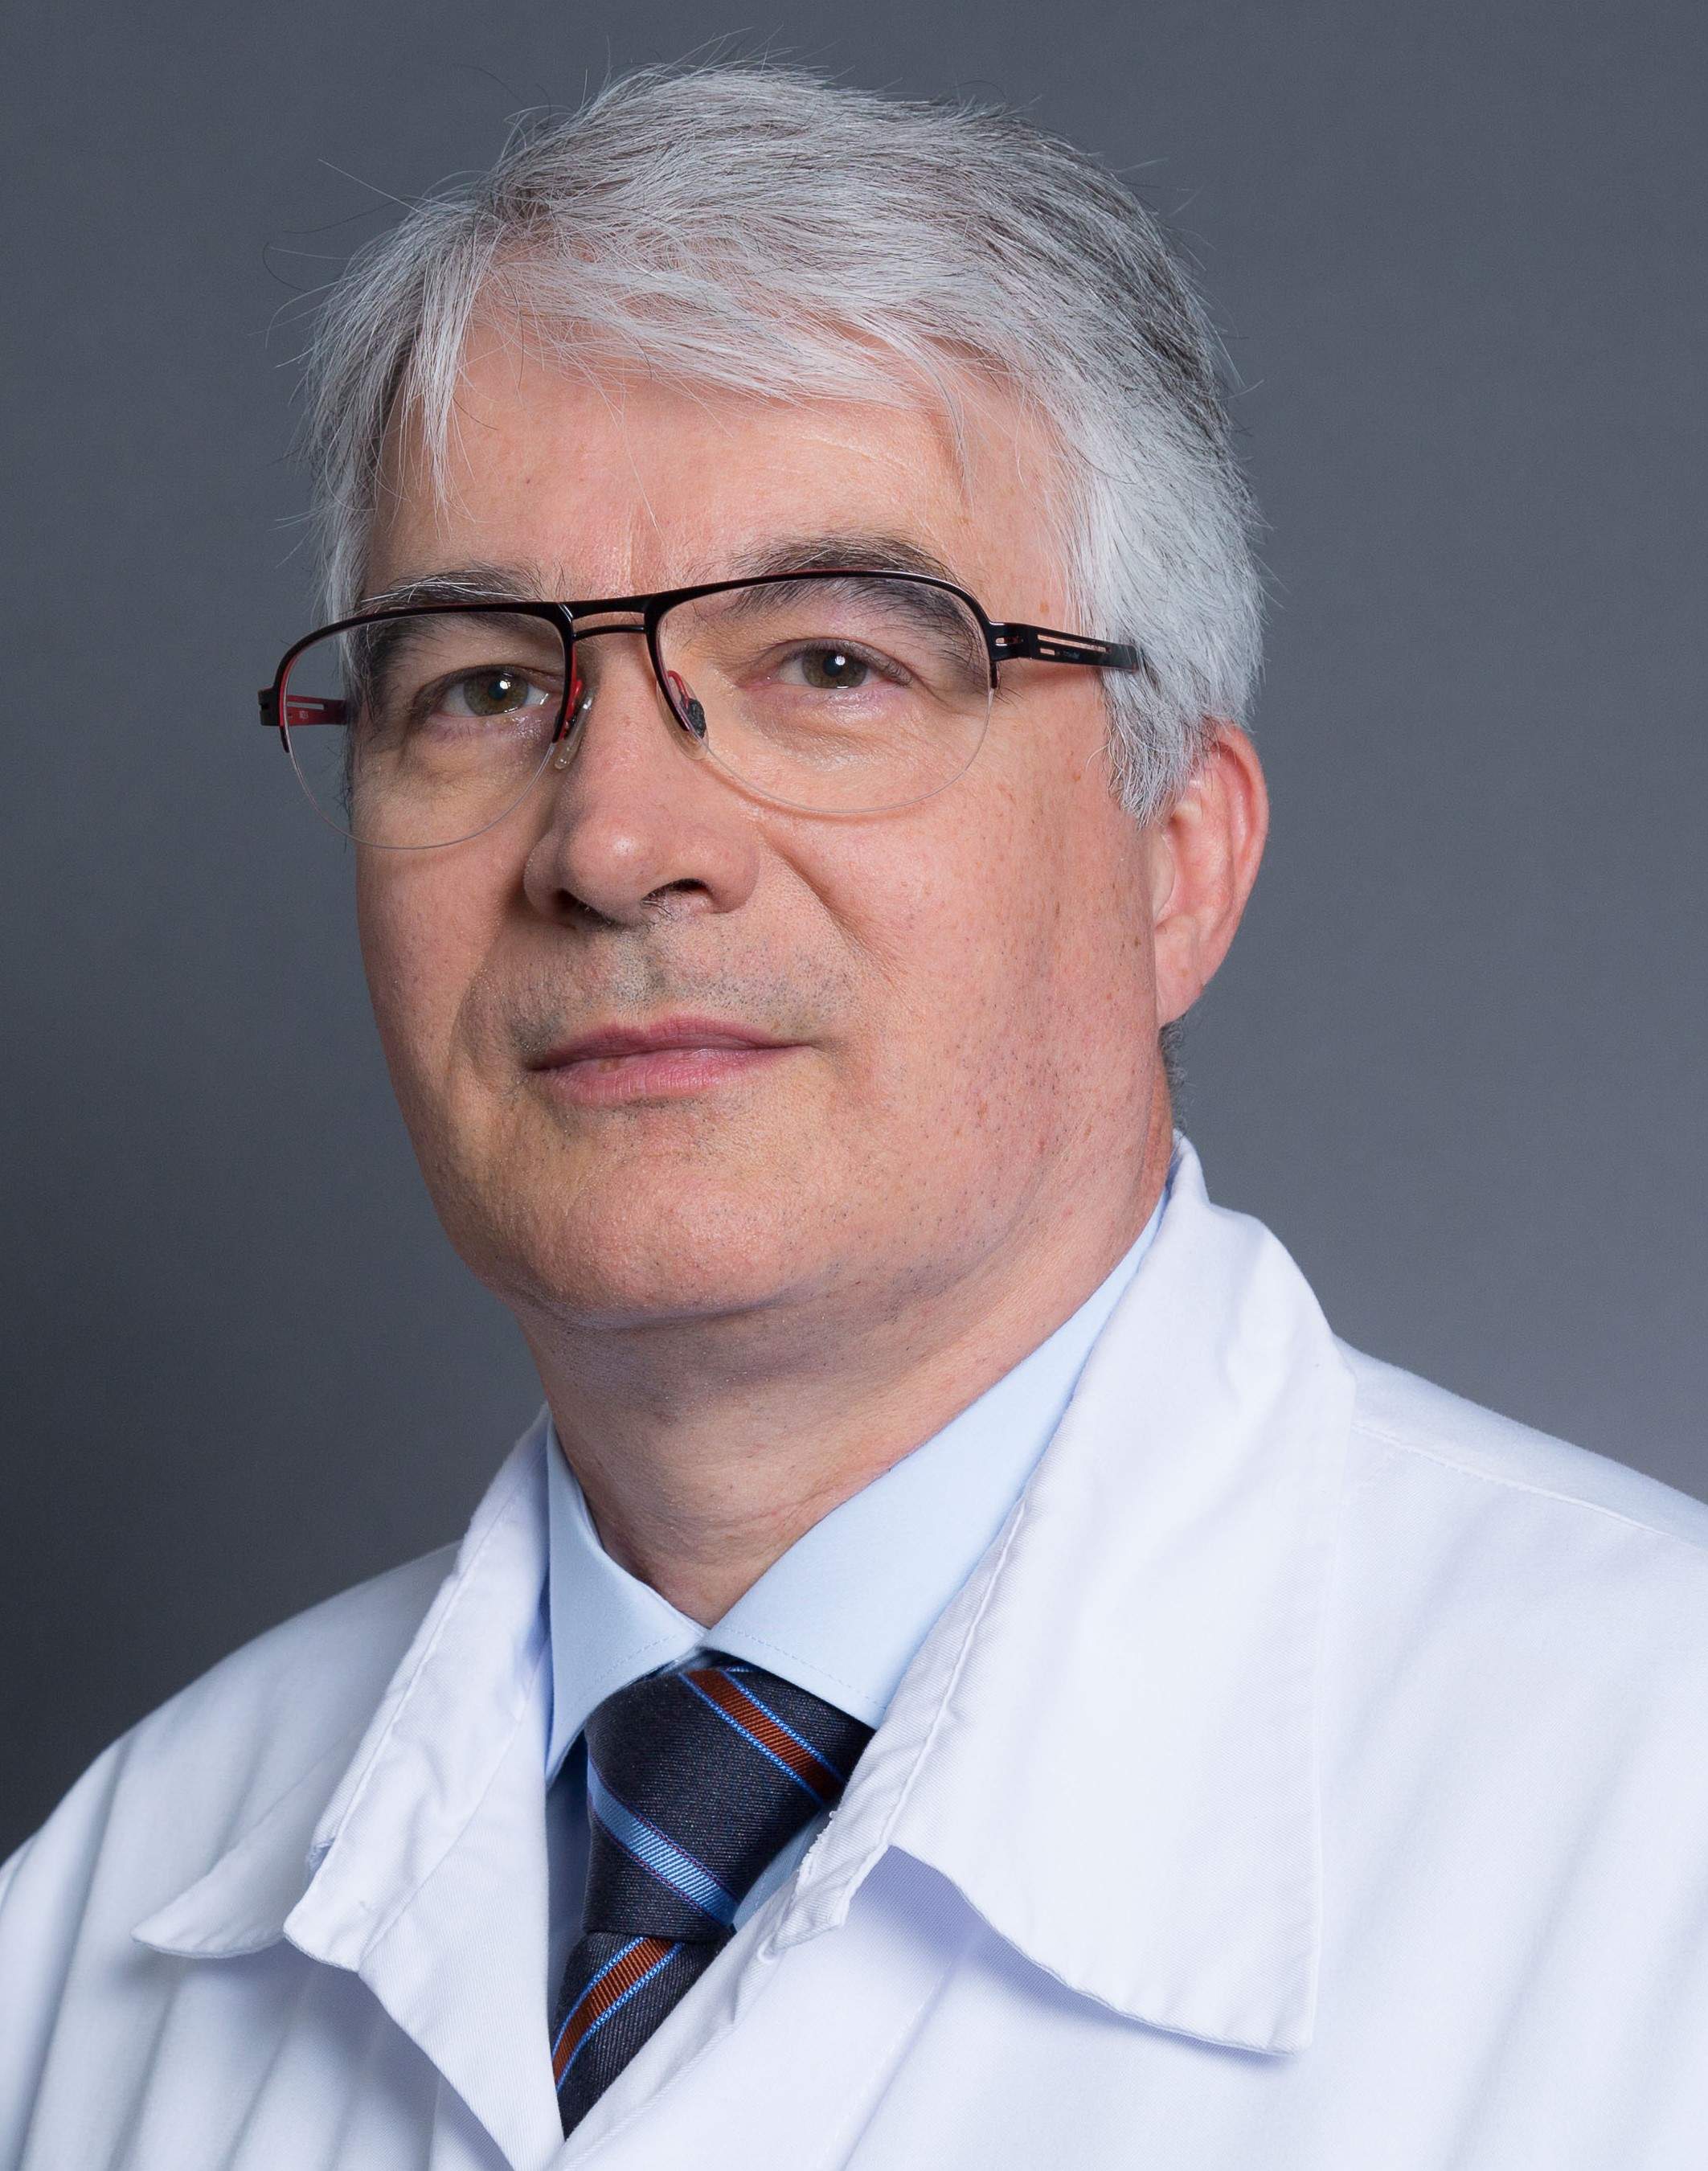 Clinical reasoning and medical expert, Geneva